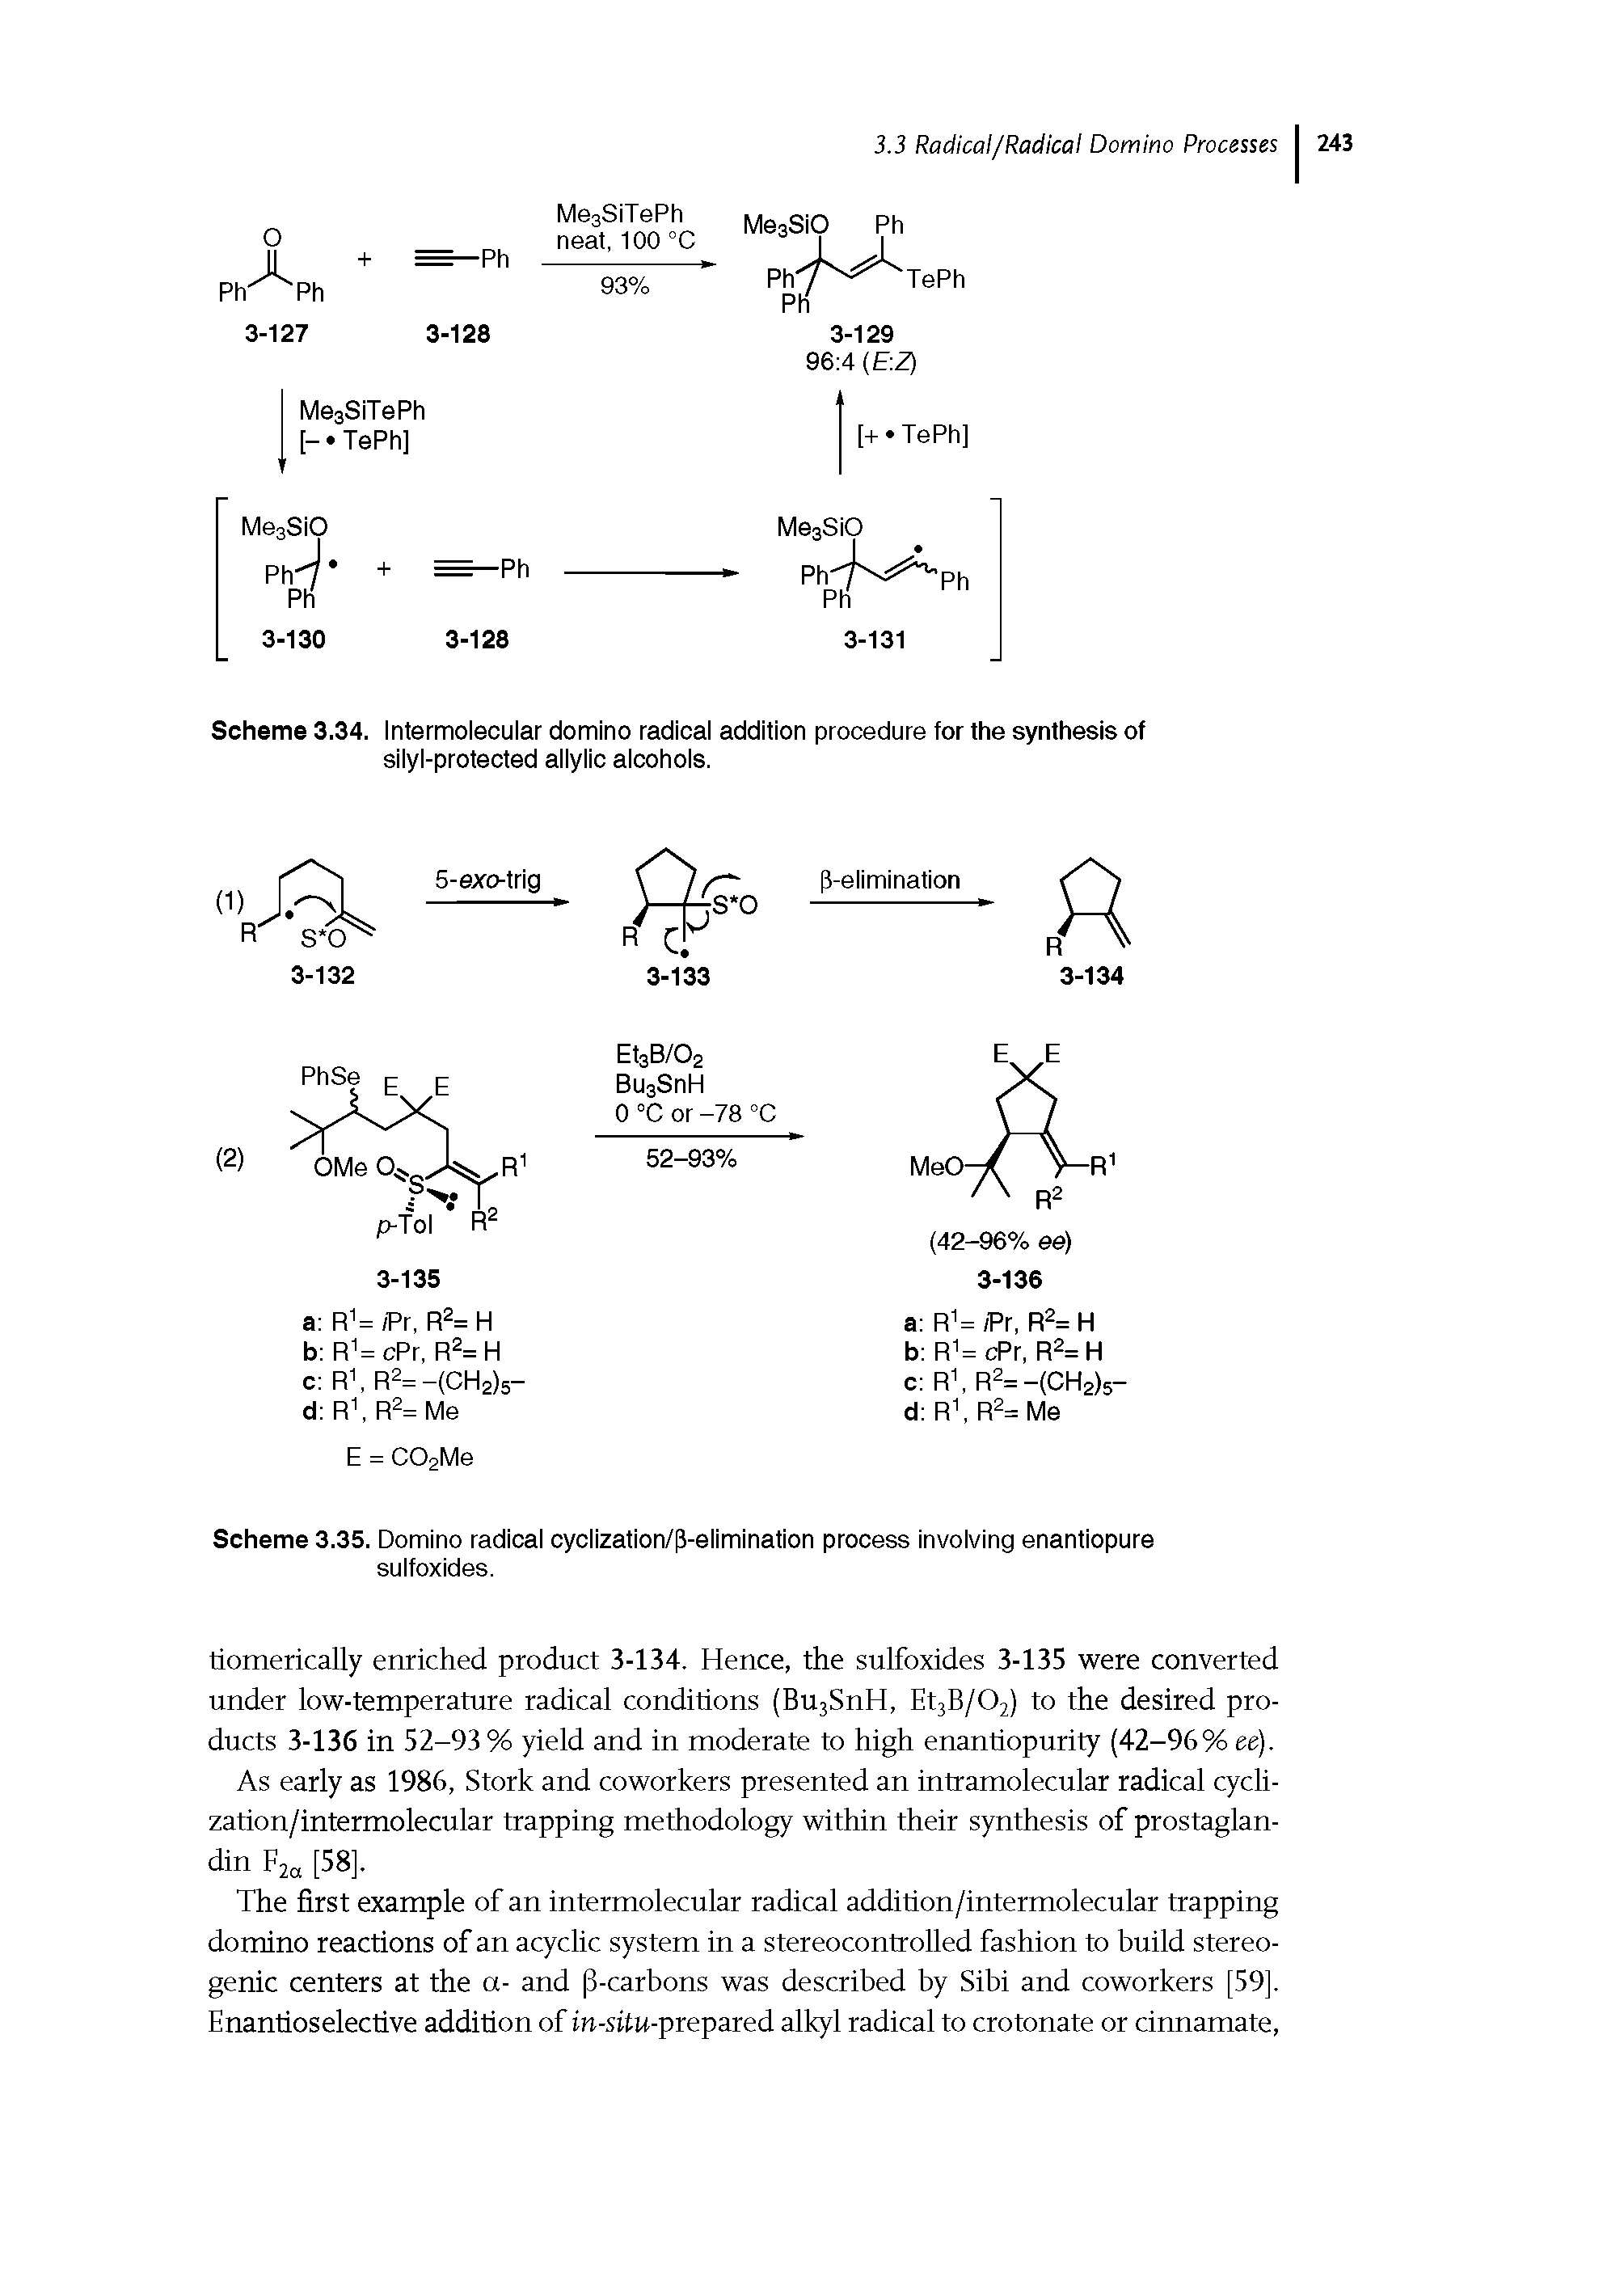 Scheme 3.35. Domino radical cyclization/p-elimination process involving enantiopure sulfoxides.